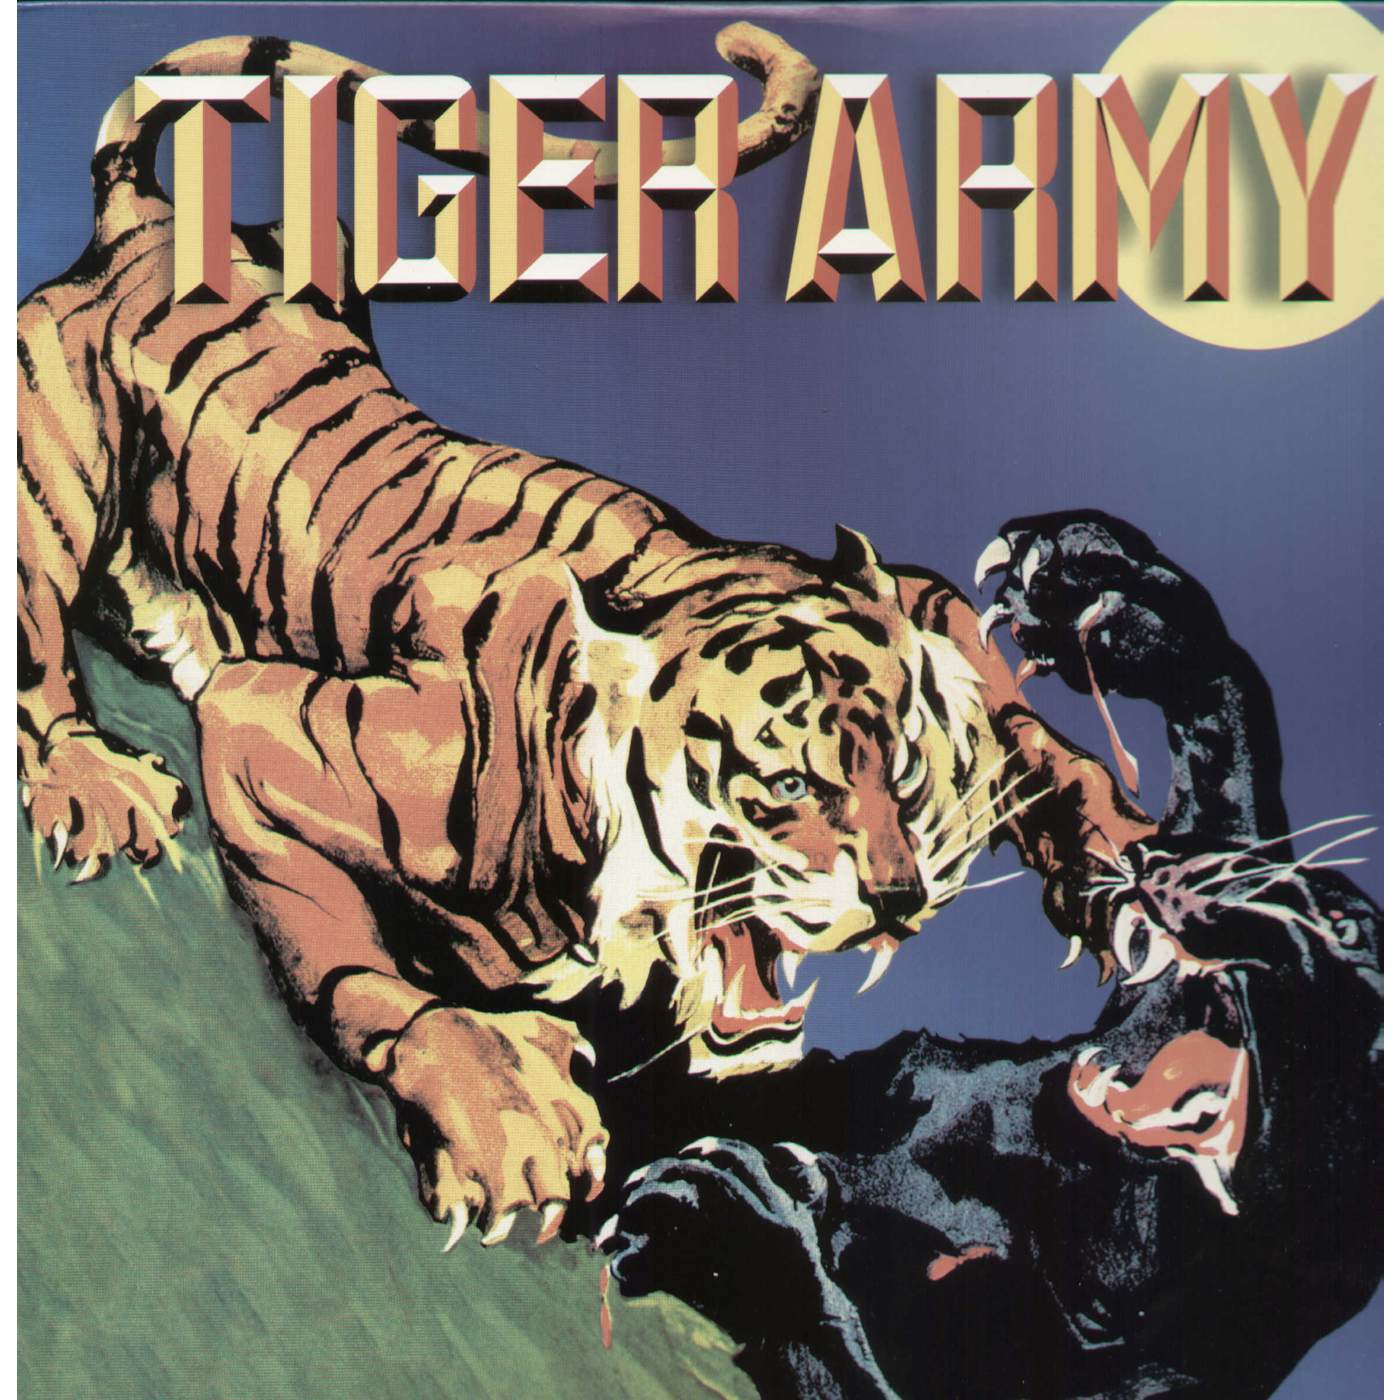  Tiger Army S/T Vinyl Record